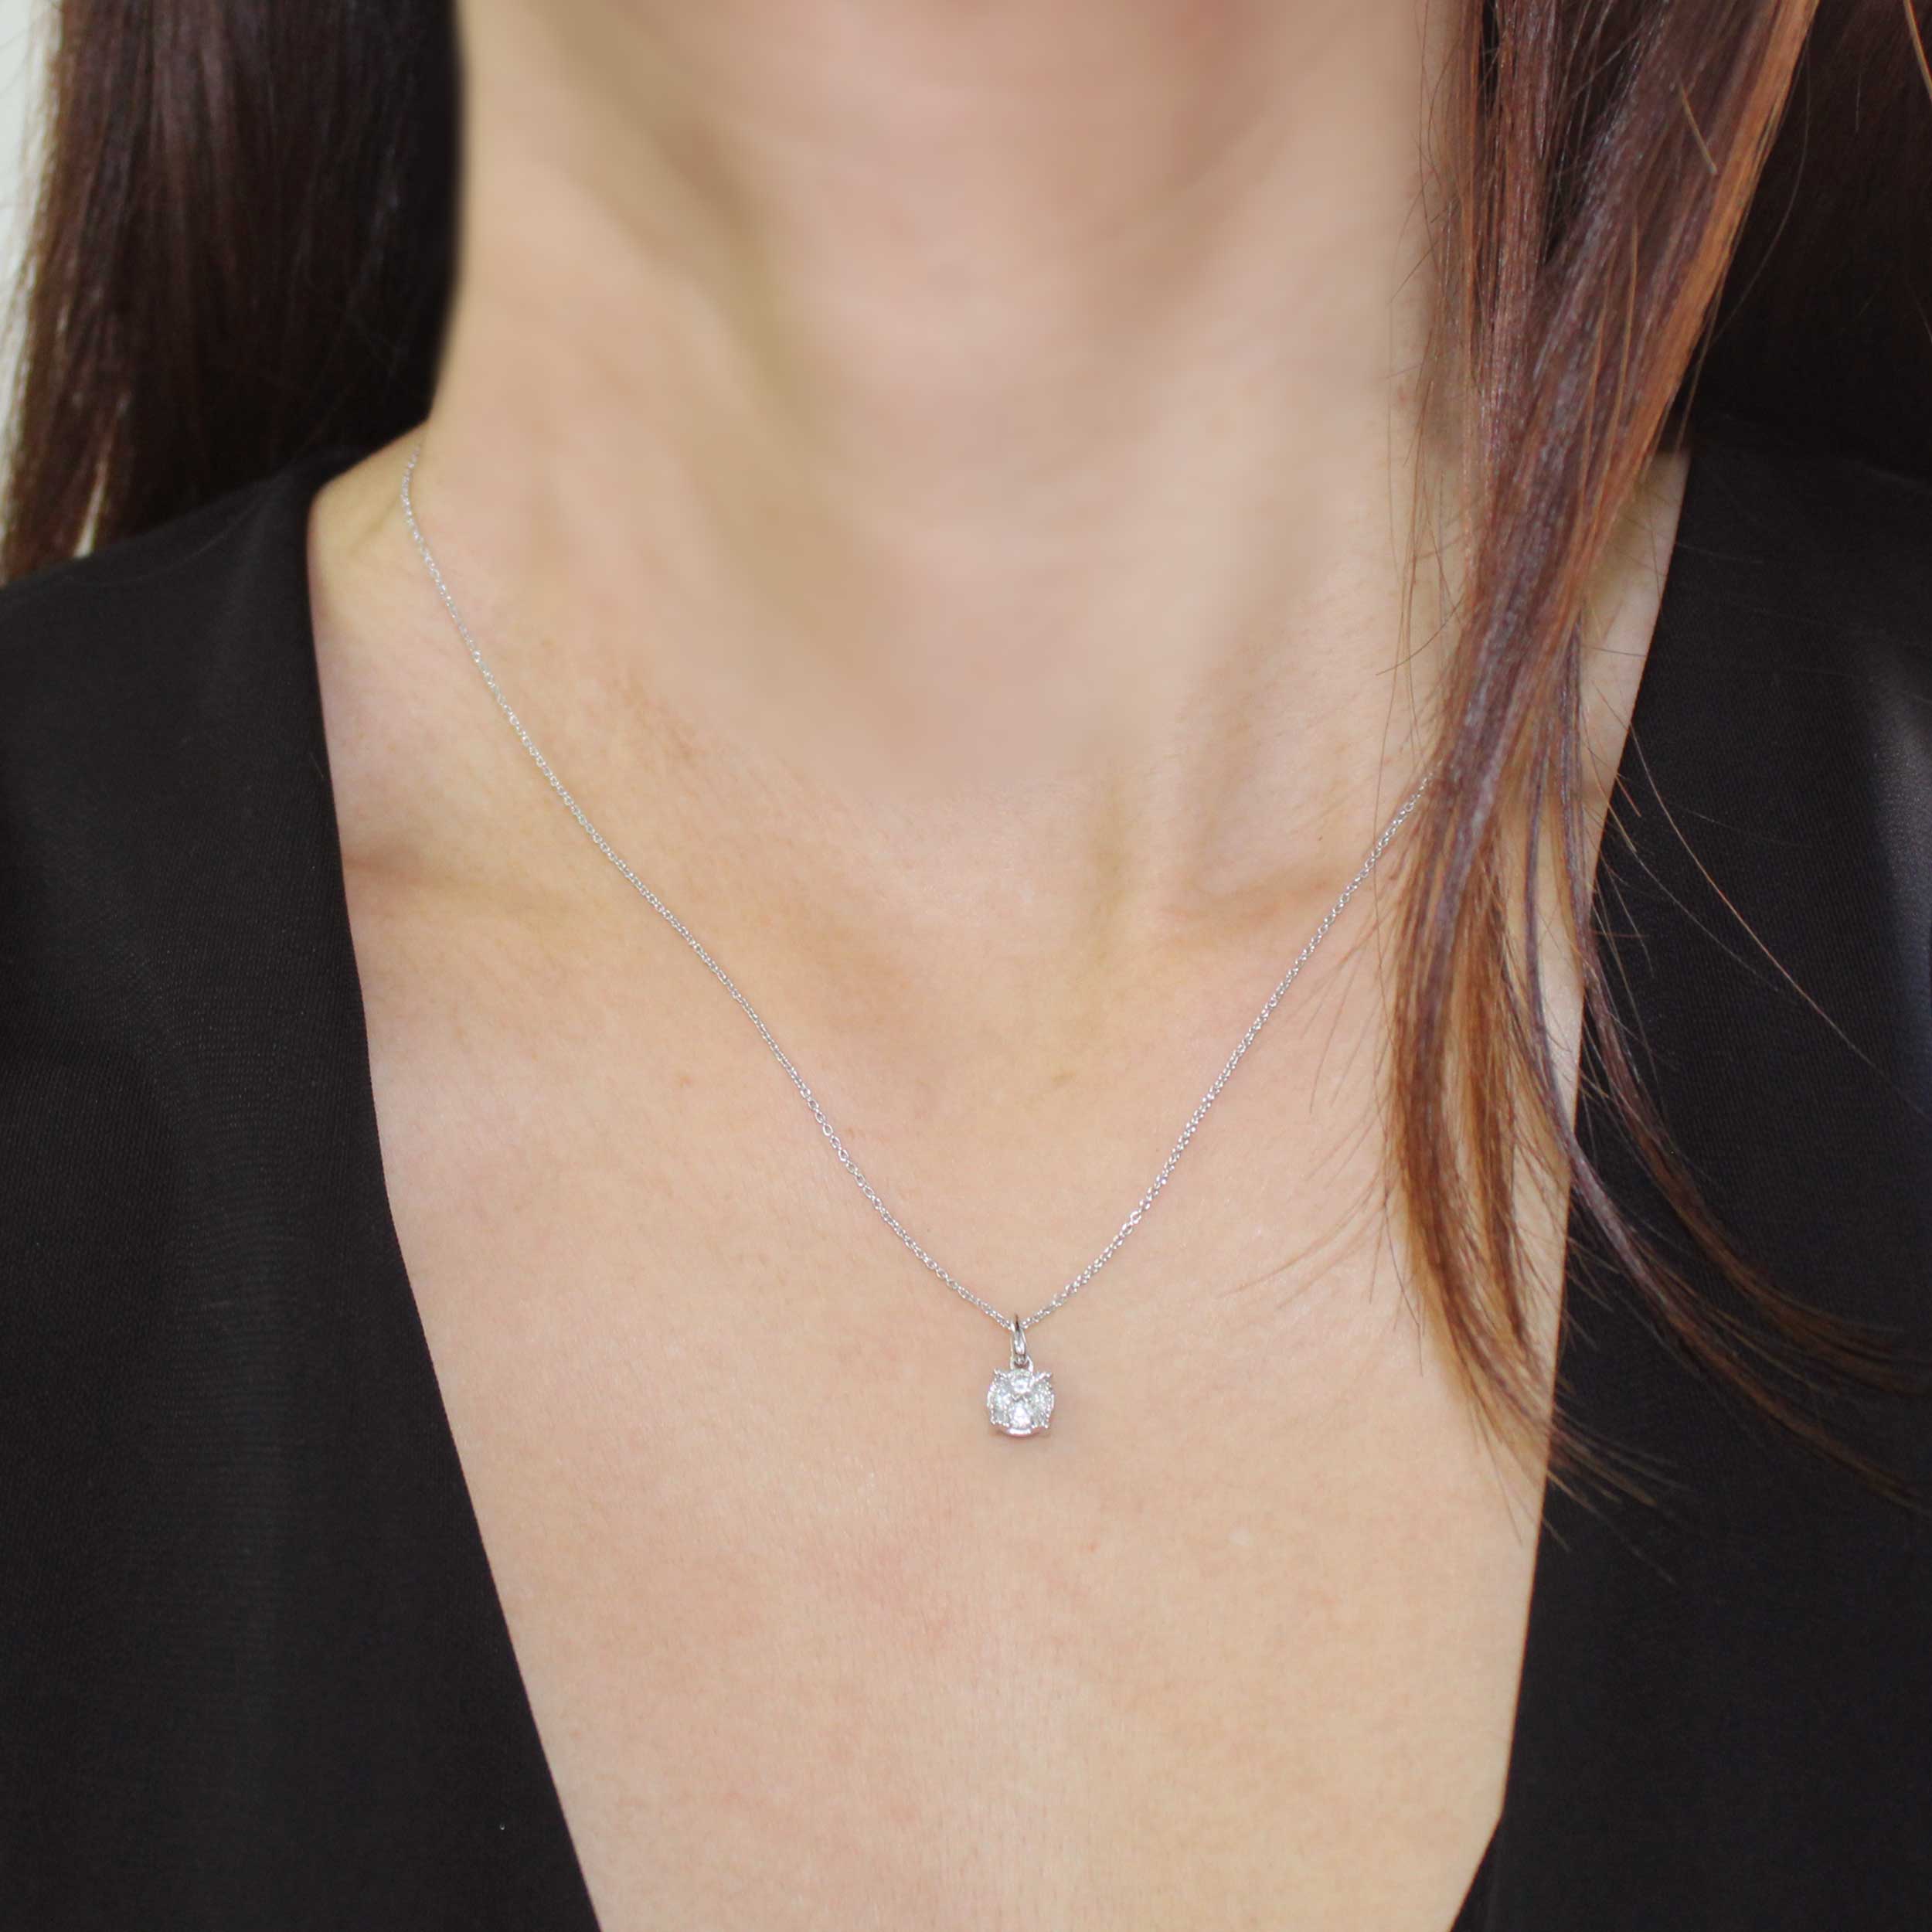 1/2 Carat Diamond Tear Drop Pendant Necklace in 14K White Gold (Silver  Chain Included) - Walmart.com